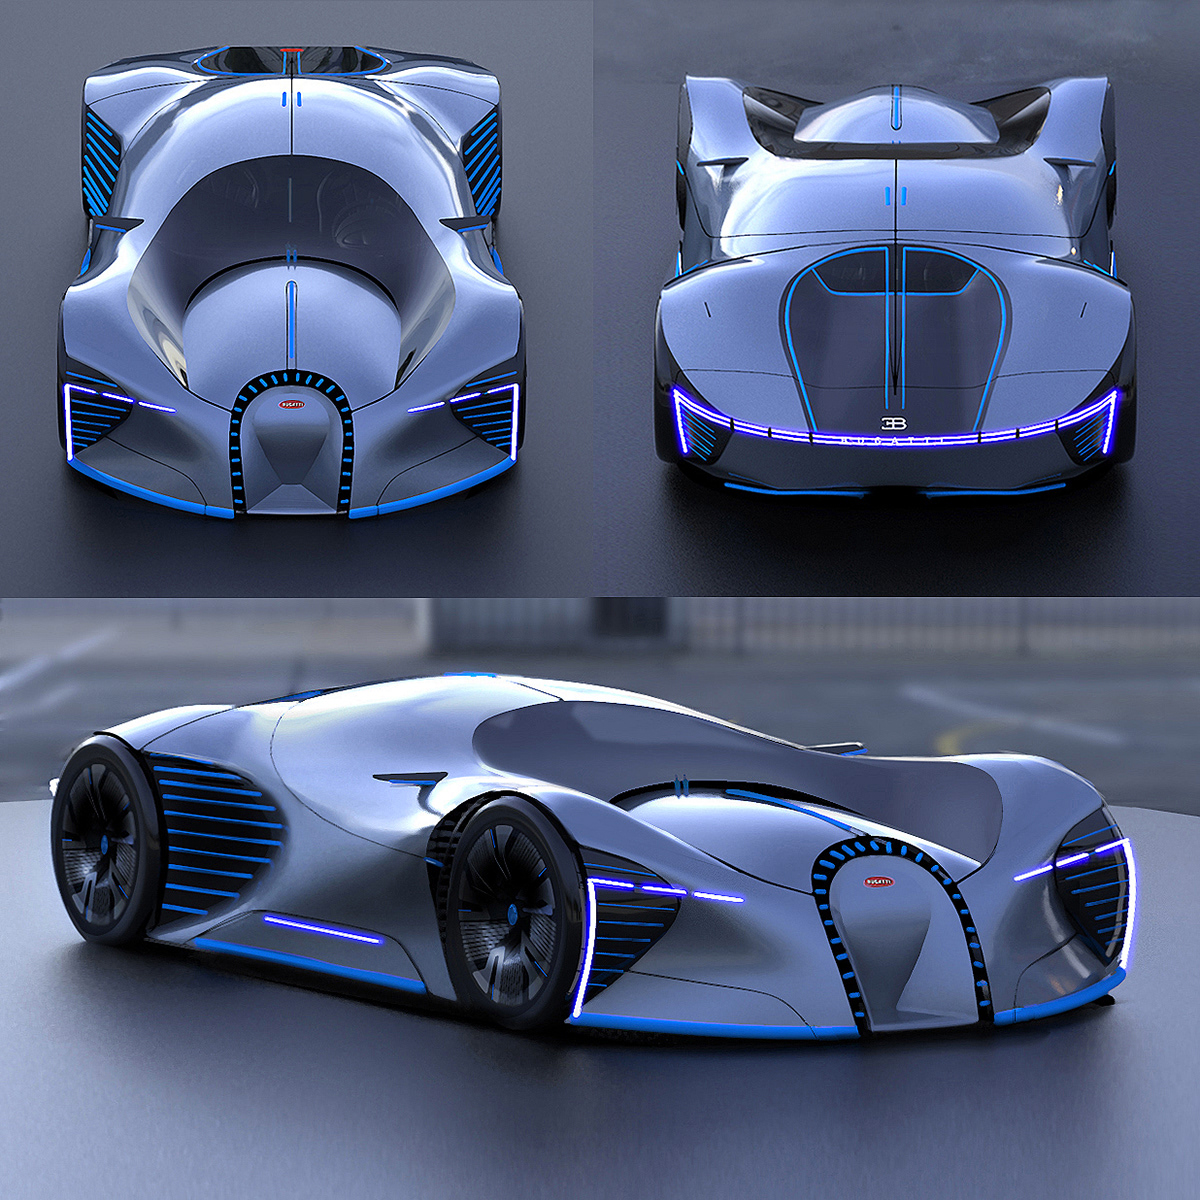 Bugatti models